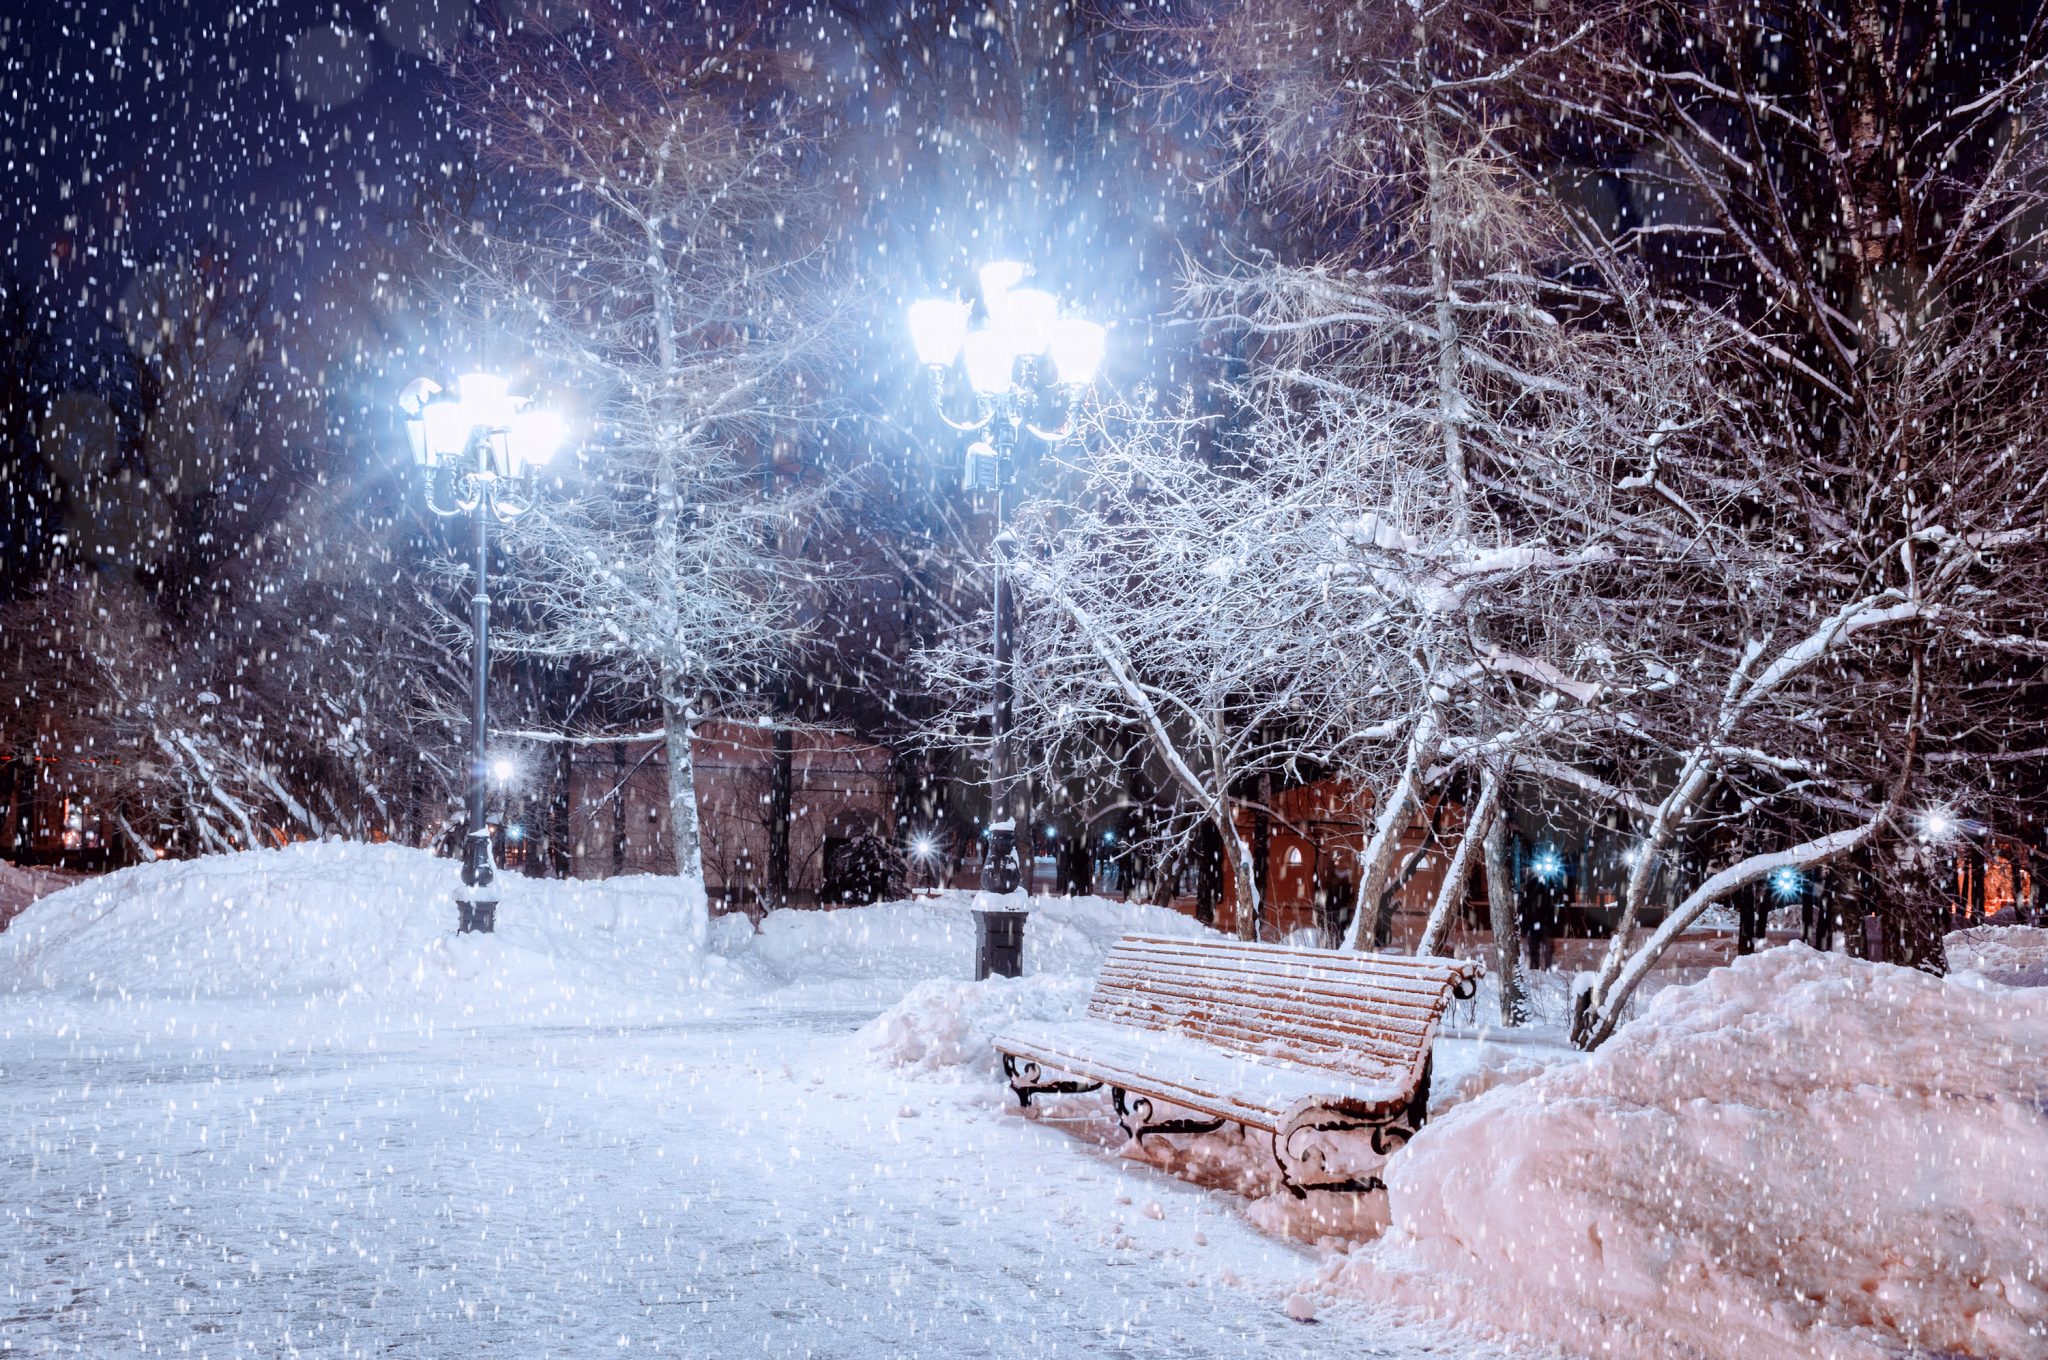 Winter night landscape - snowy bench under frosty trees